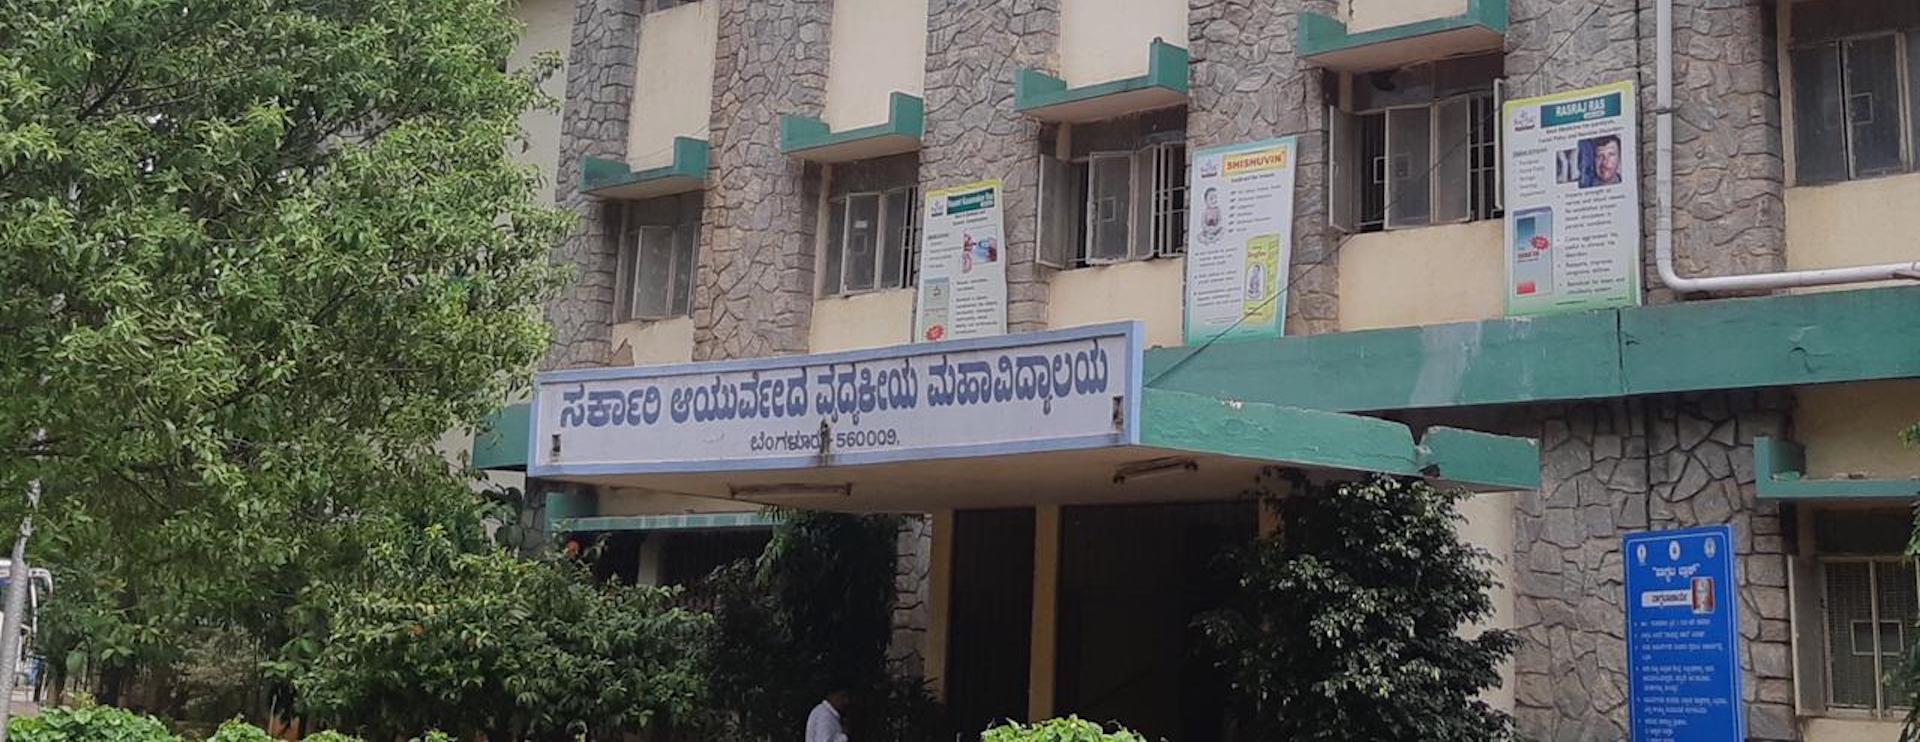 Government Ayurvedic Medical College, Bengaluru Image